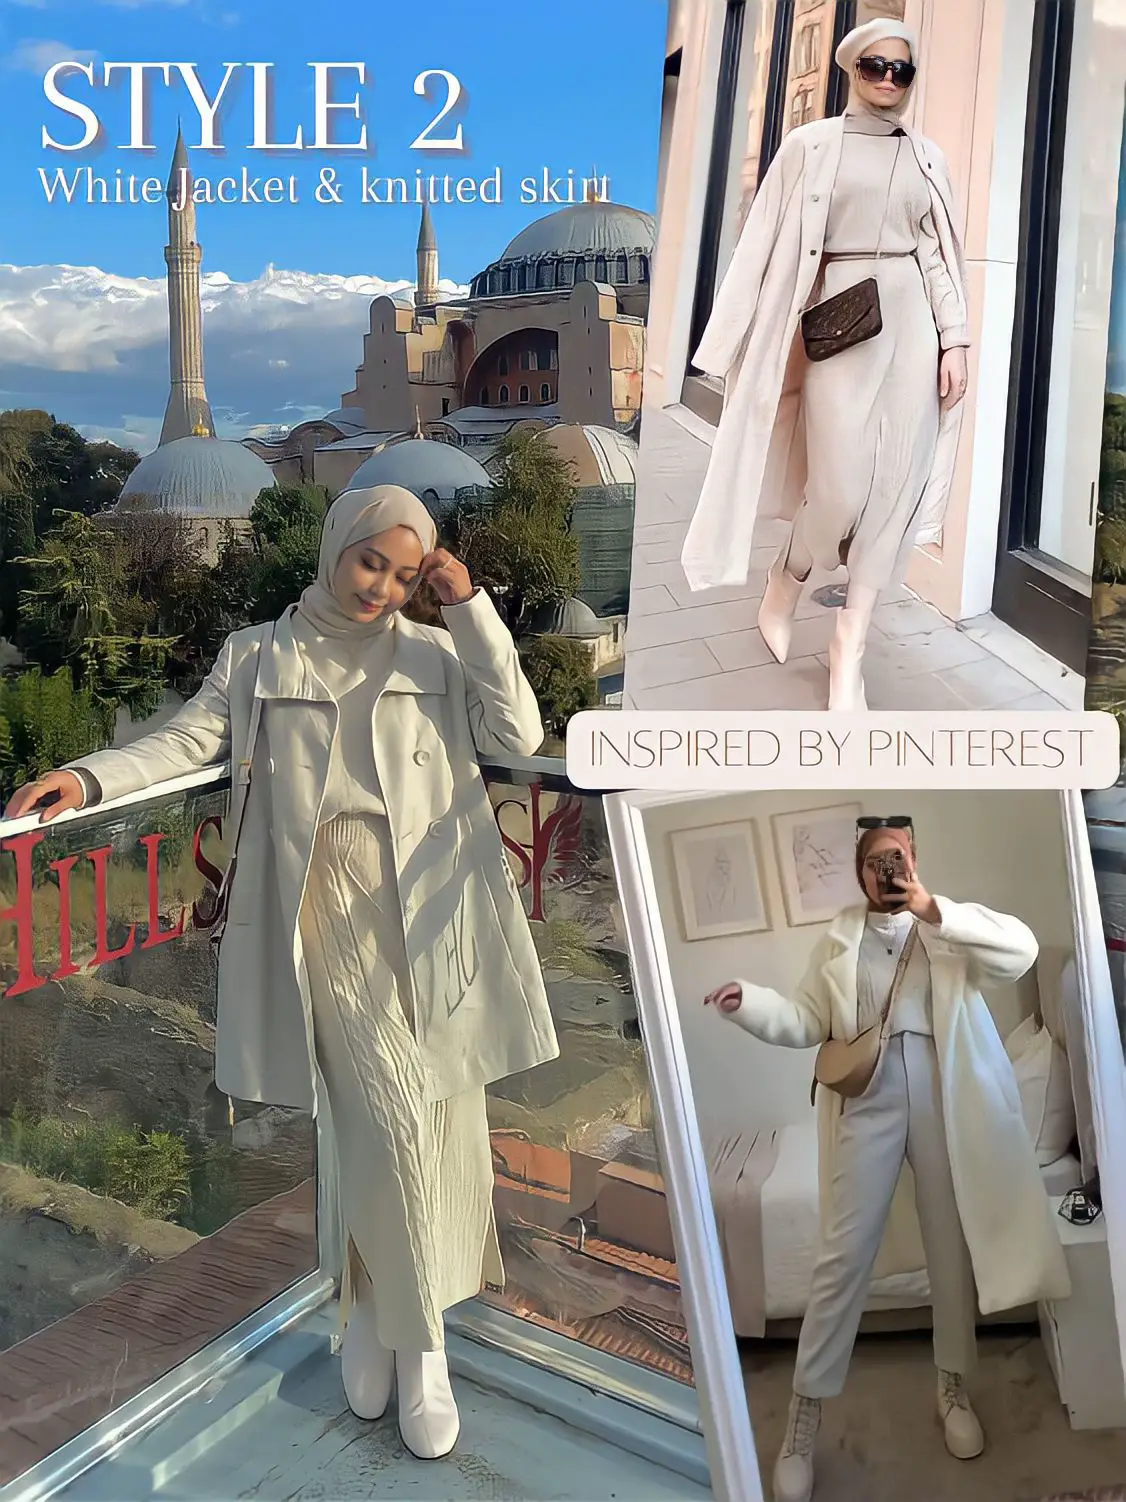 Travel outfit lookbook : Fly to turkey with me! 🇹🇷✈️, Galeri disiarkan  oleh EikaZulaikha 🤎